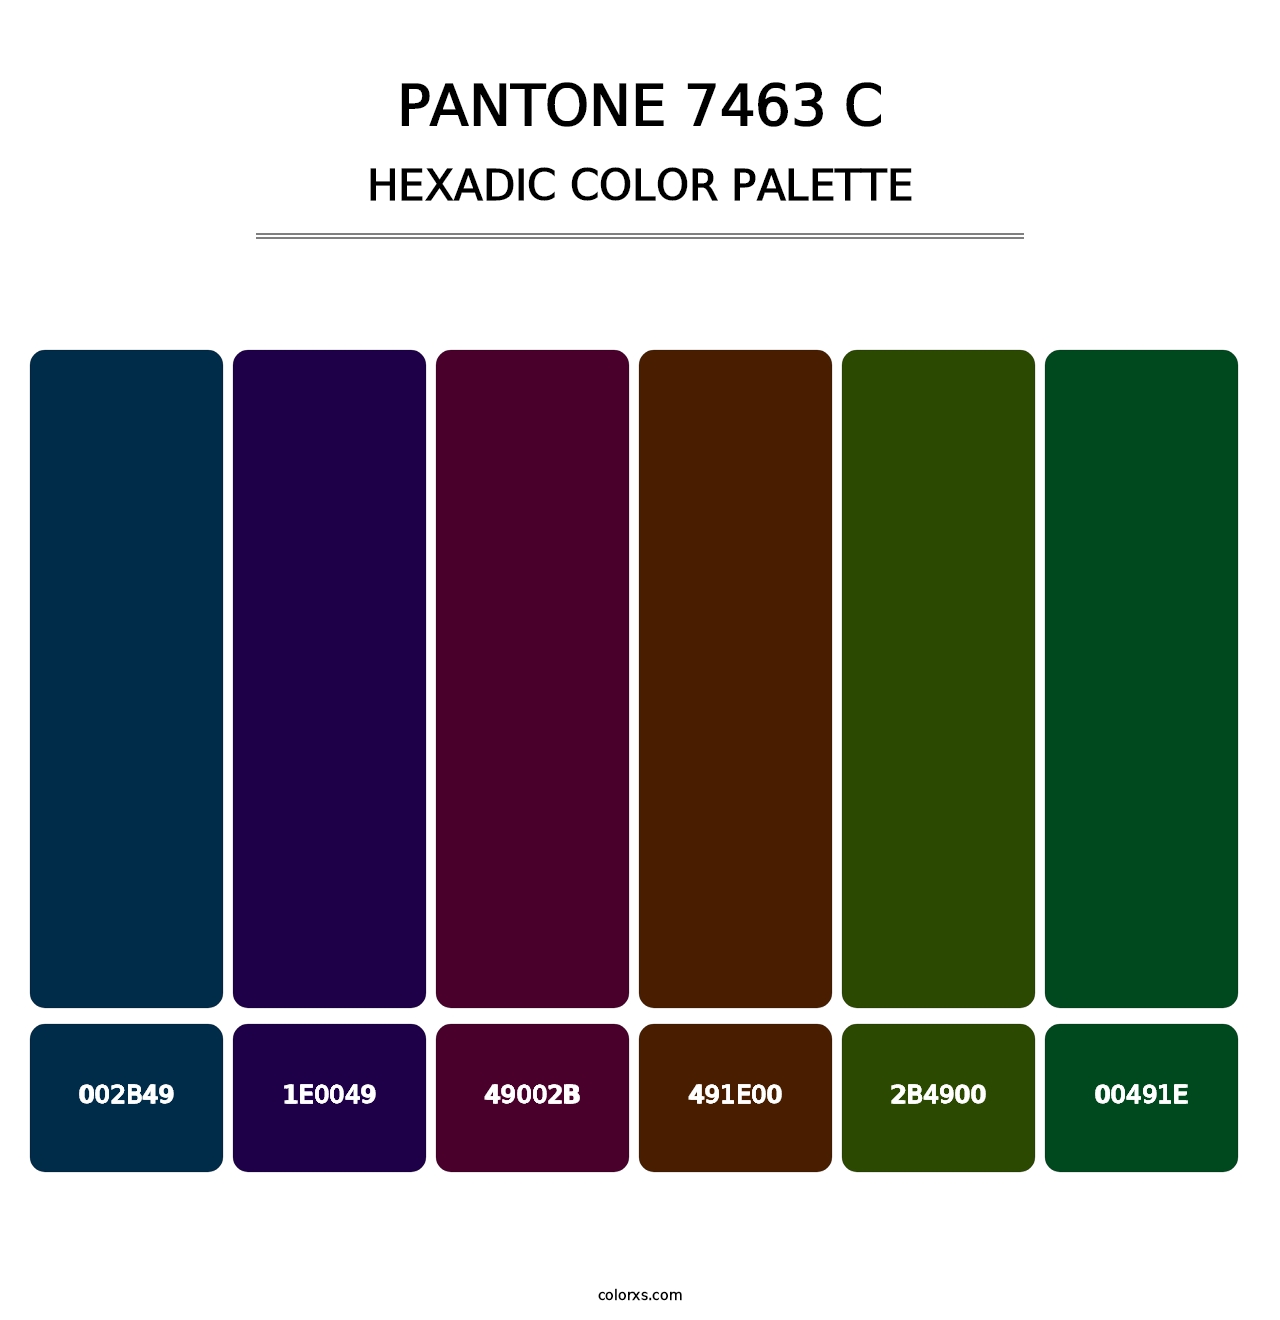 PANTONE 7463 C - Hexadic Color Palette